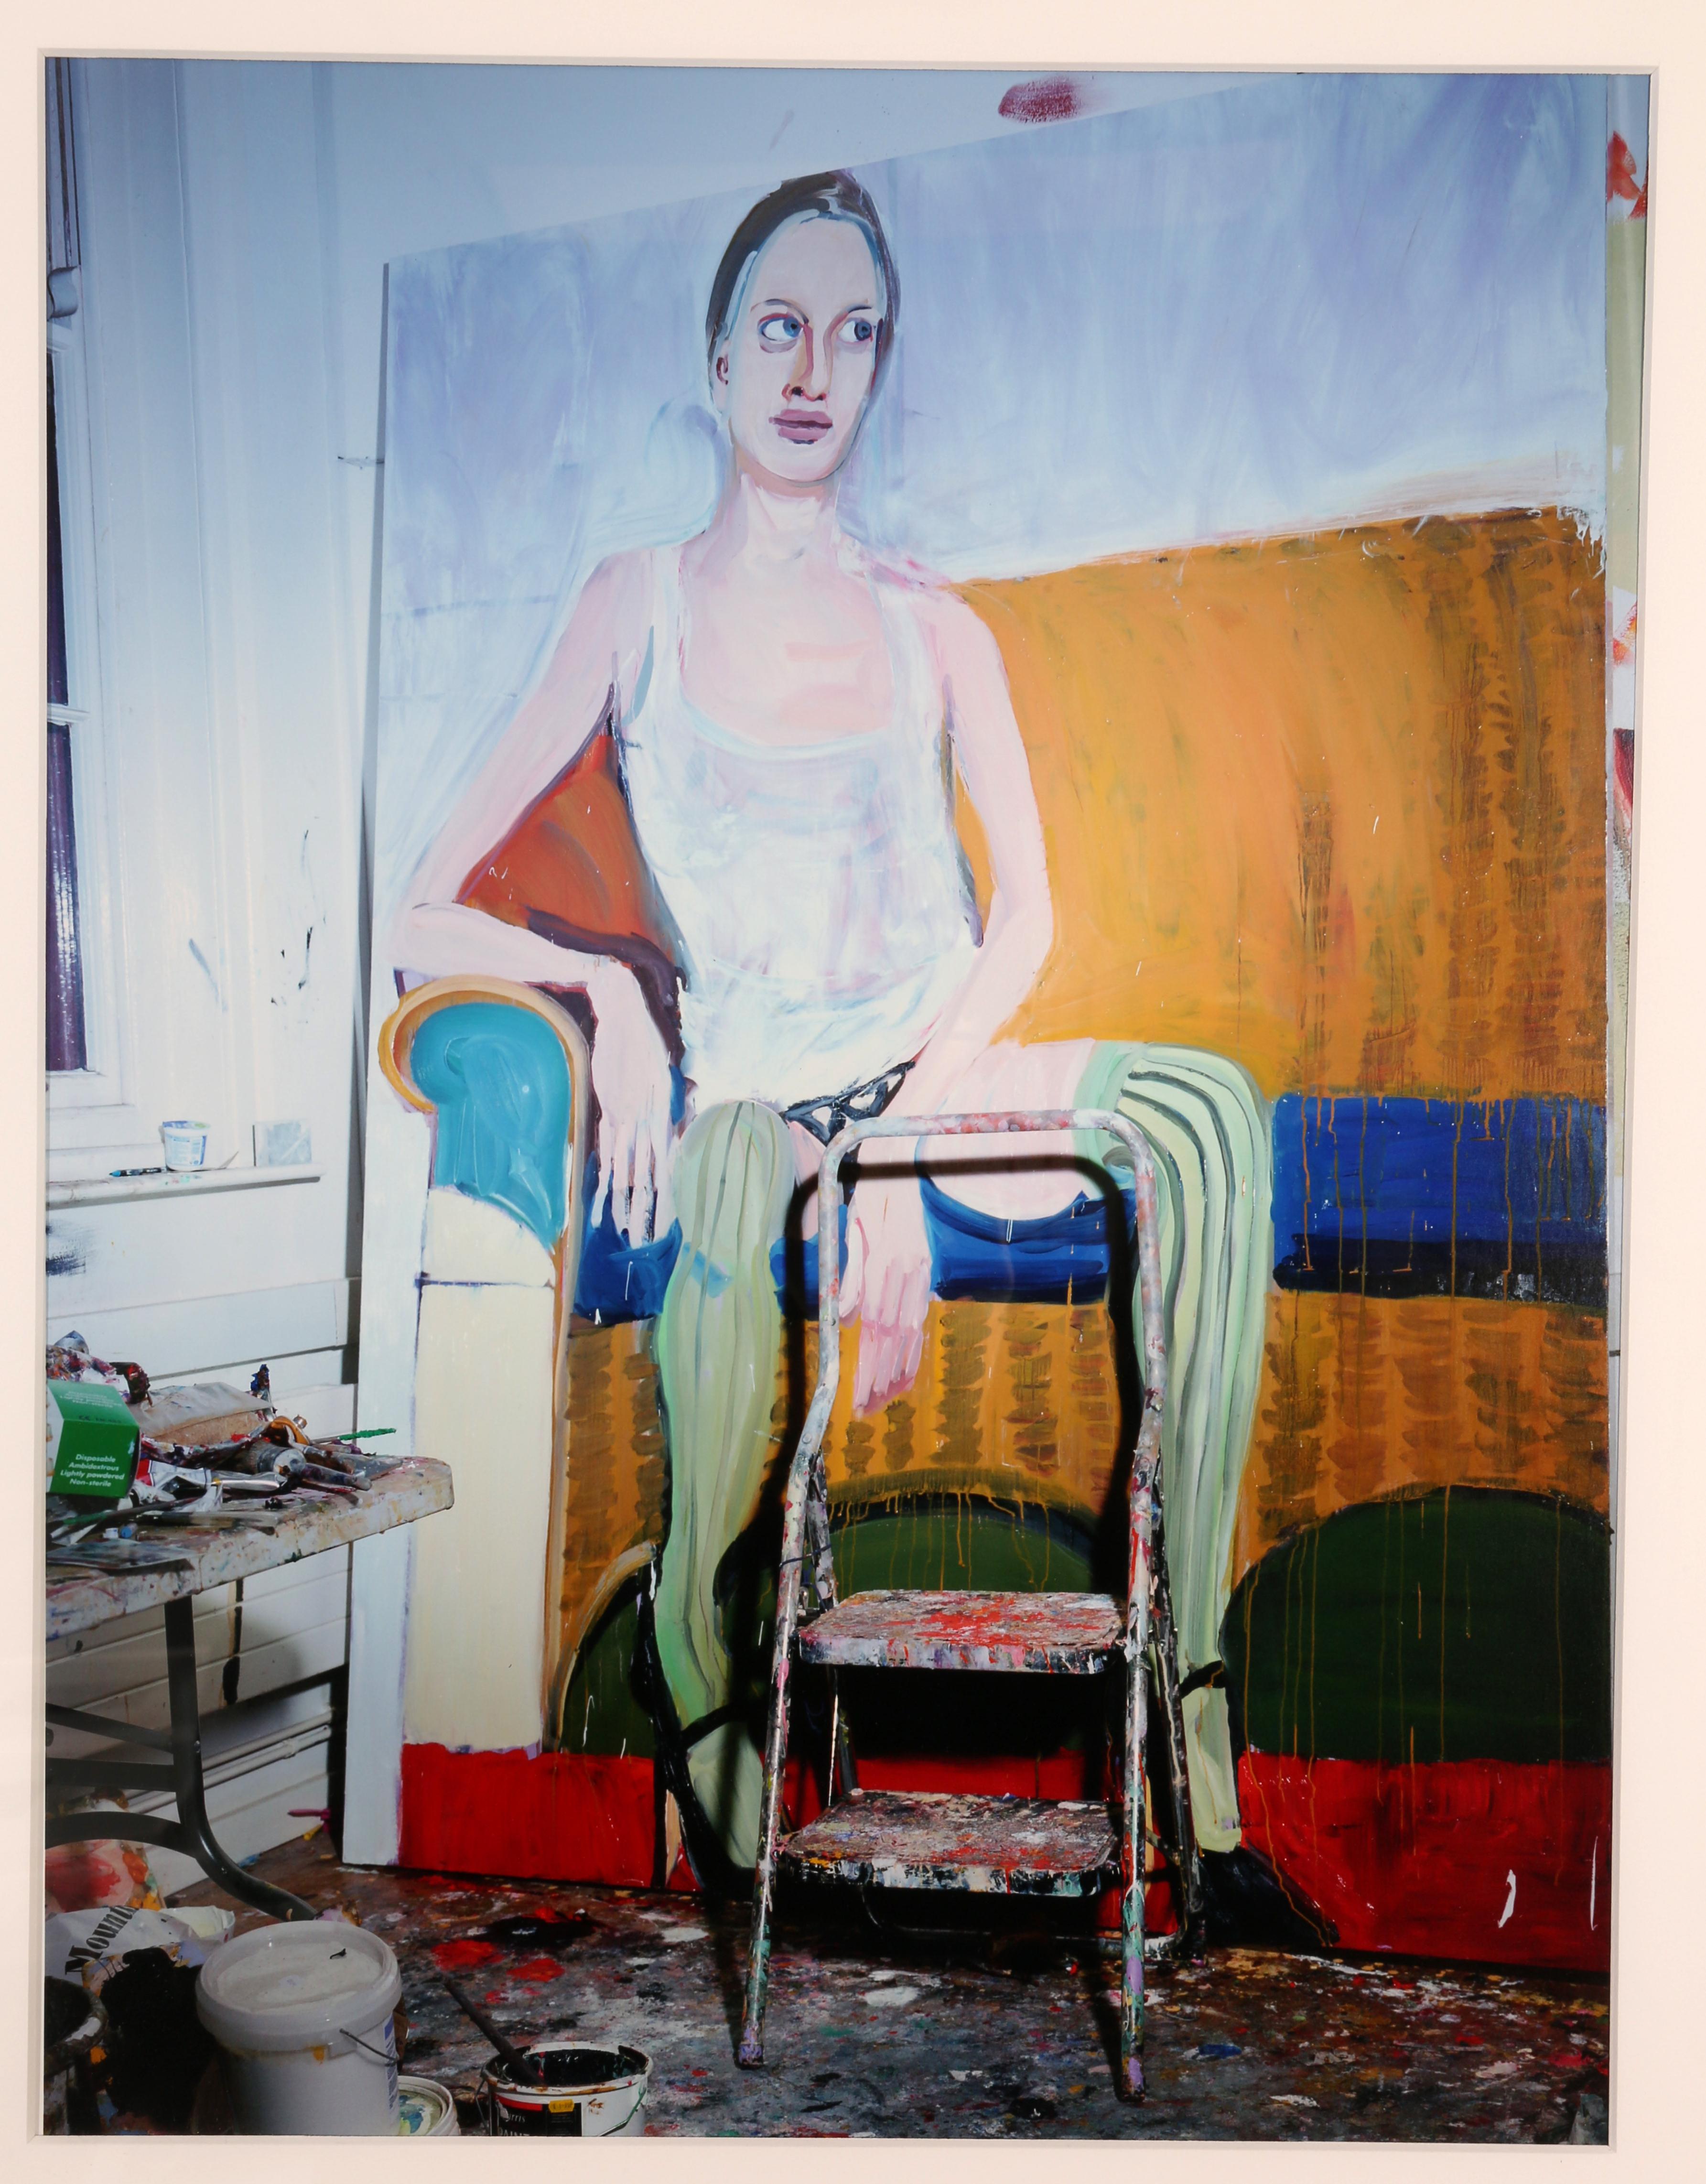 Kristen, Painting by Chantal Joffe (from Kristen series)  - Gray Portrait Photograph by Miles Aldridge